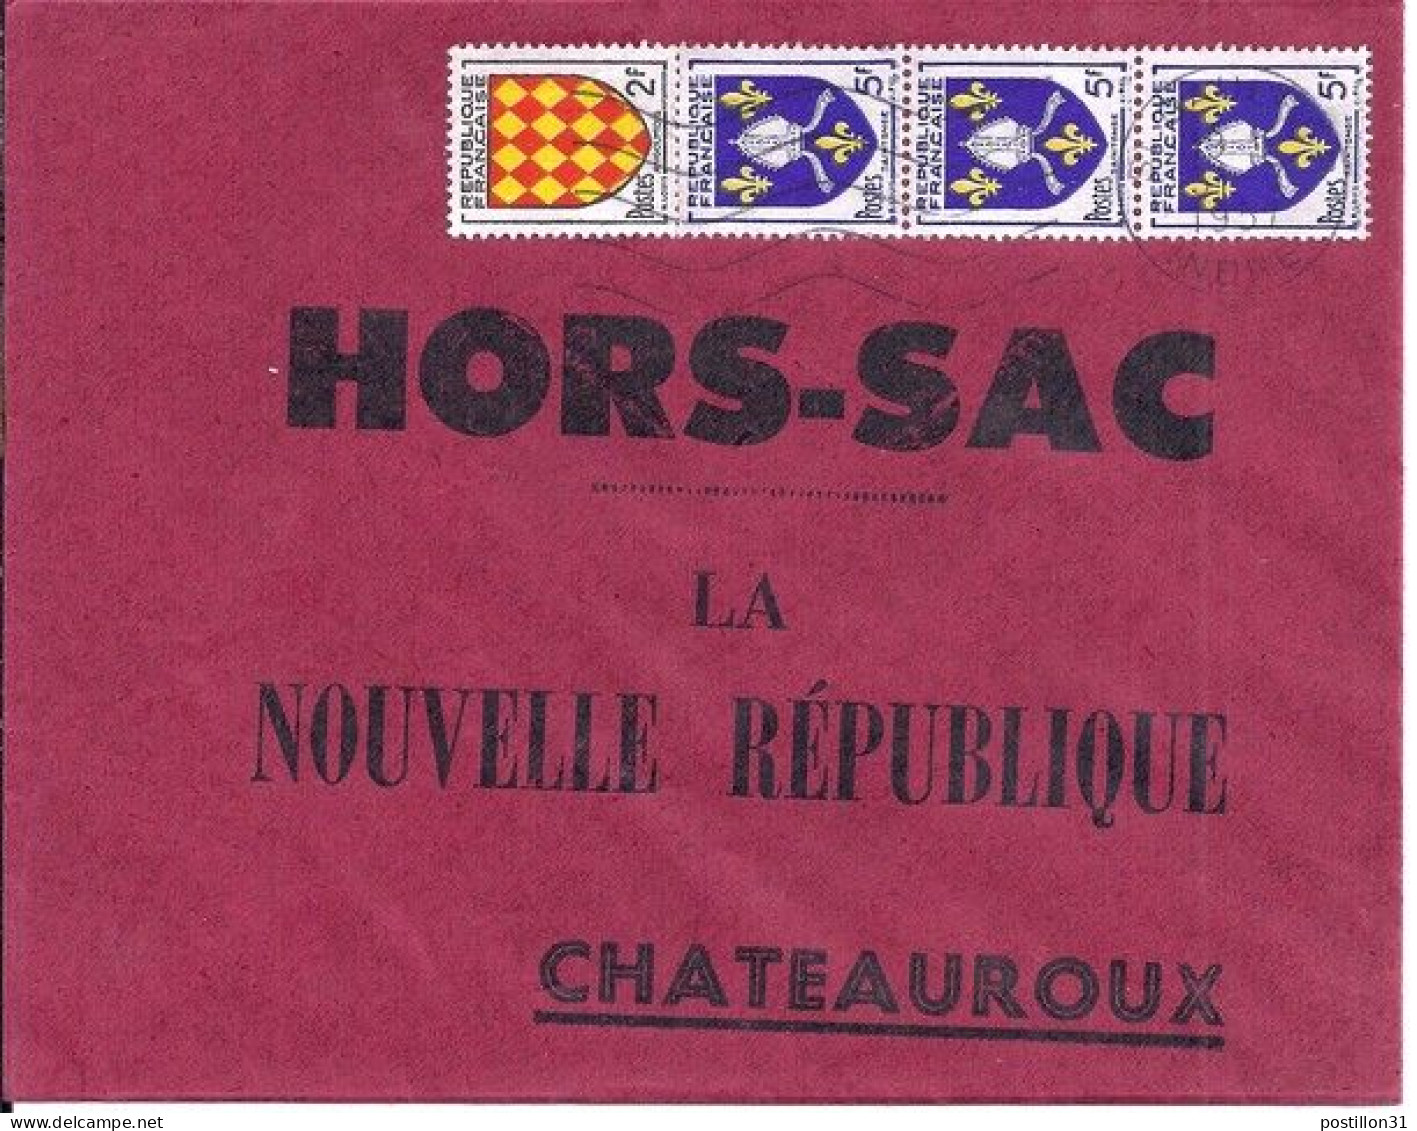 ARMOIRIES ET BLASONS N° 1005x3/1003 S/L.HORS SAC DIVERSES DE 1957-58 - 1941-66 Wappen